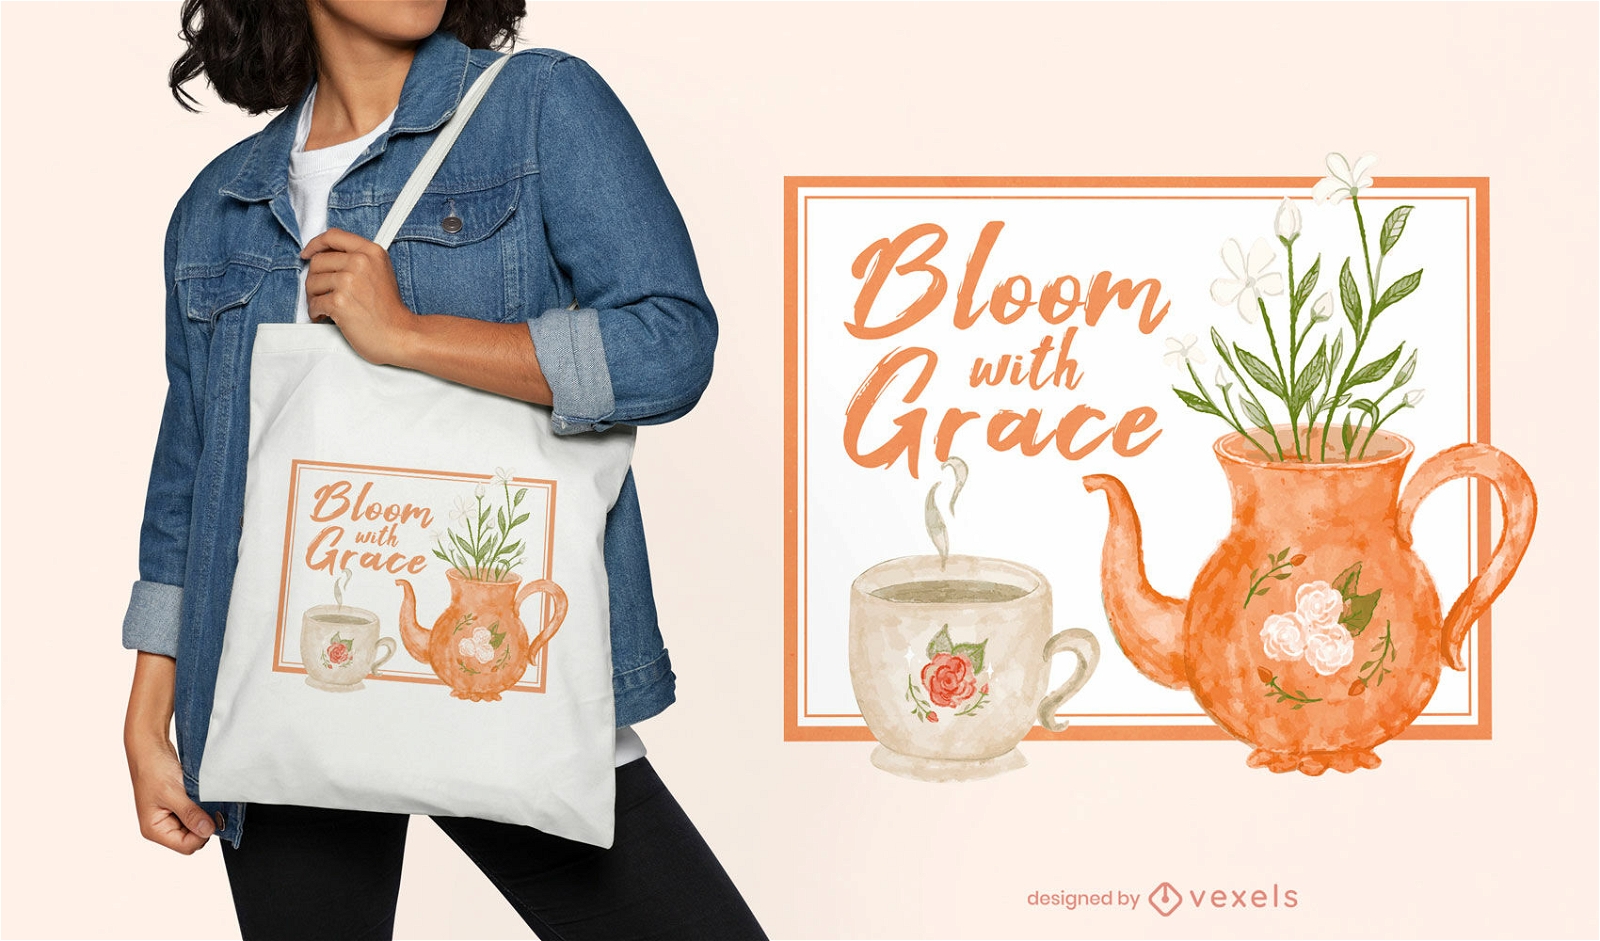 Graceful plant growth tote bag design